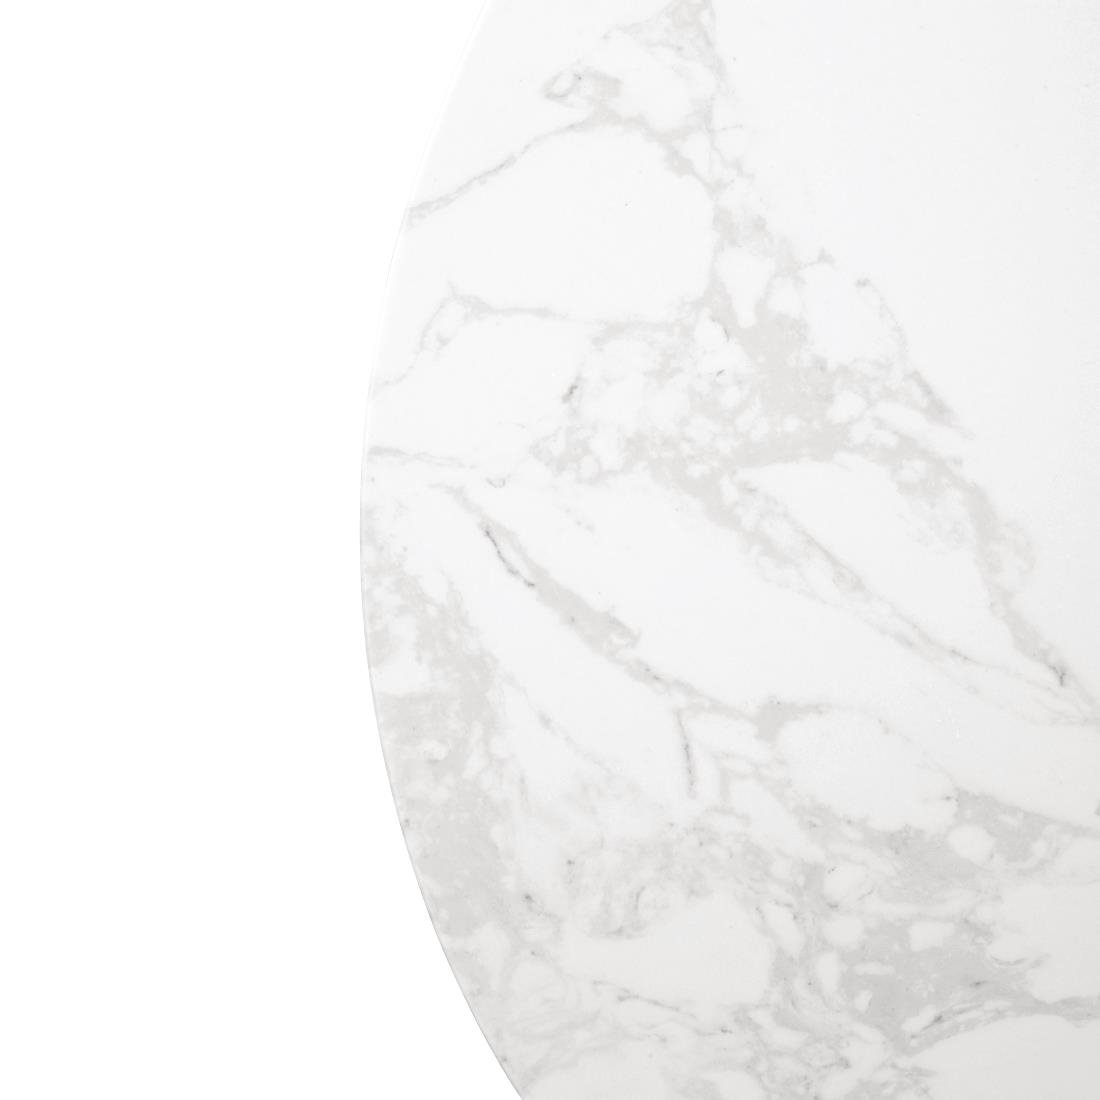 Plateau de table rond effet marbre Bolero blanc 600mm